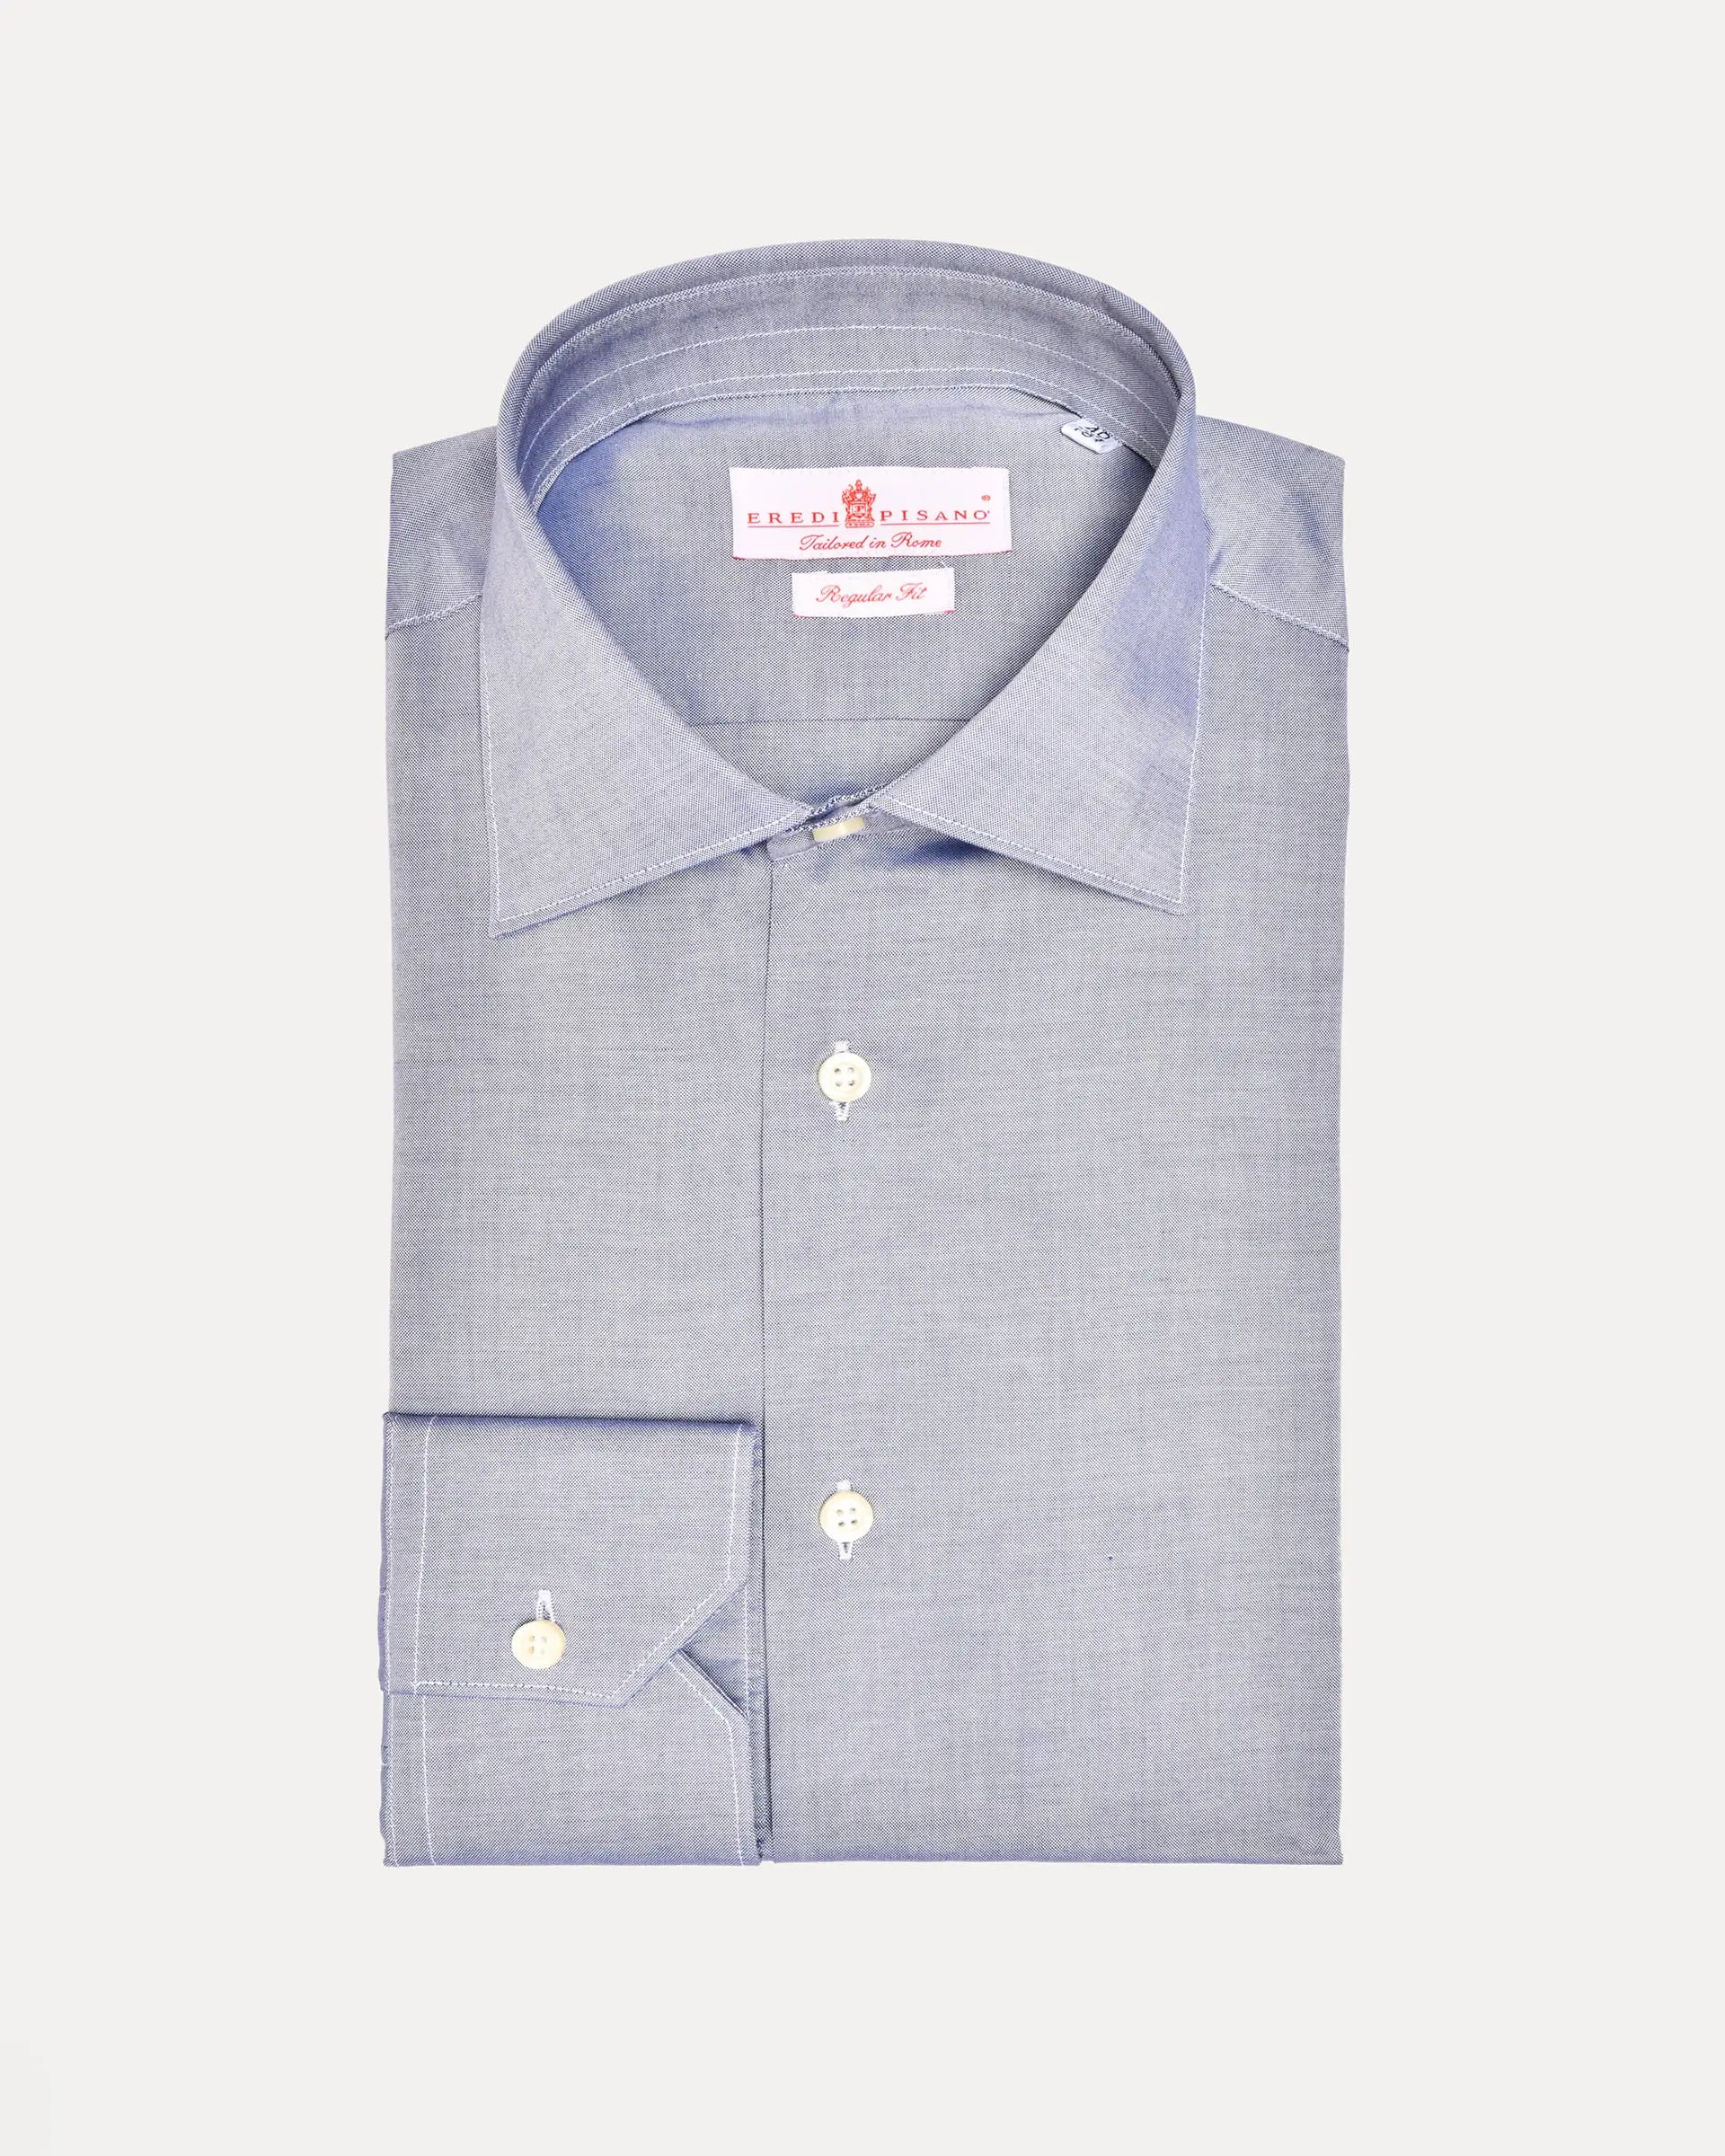 Regular fit grey shirt with spread collar